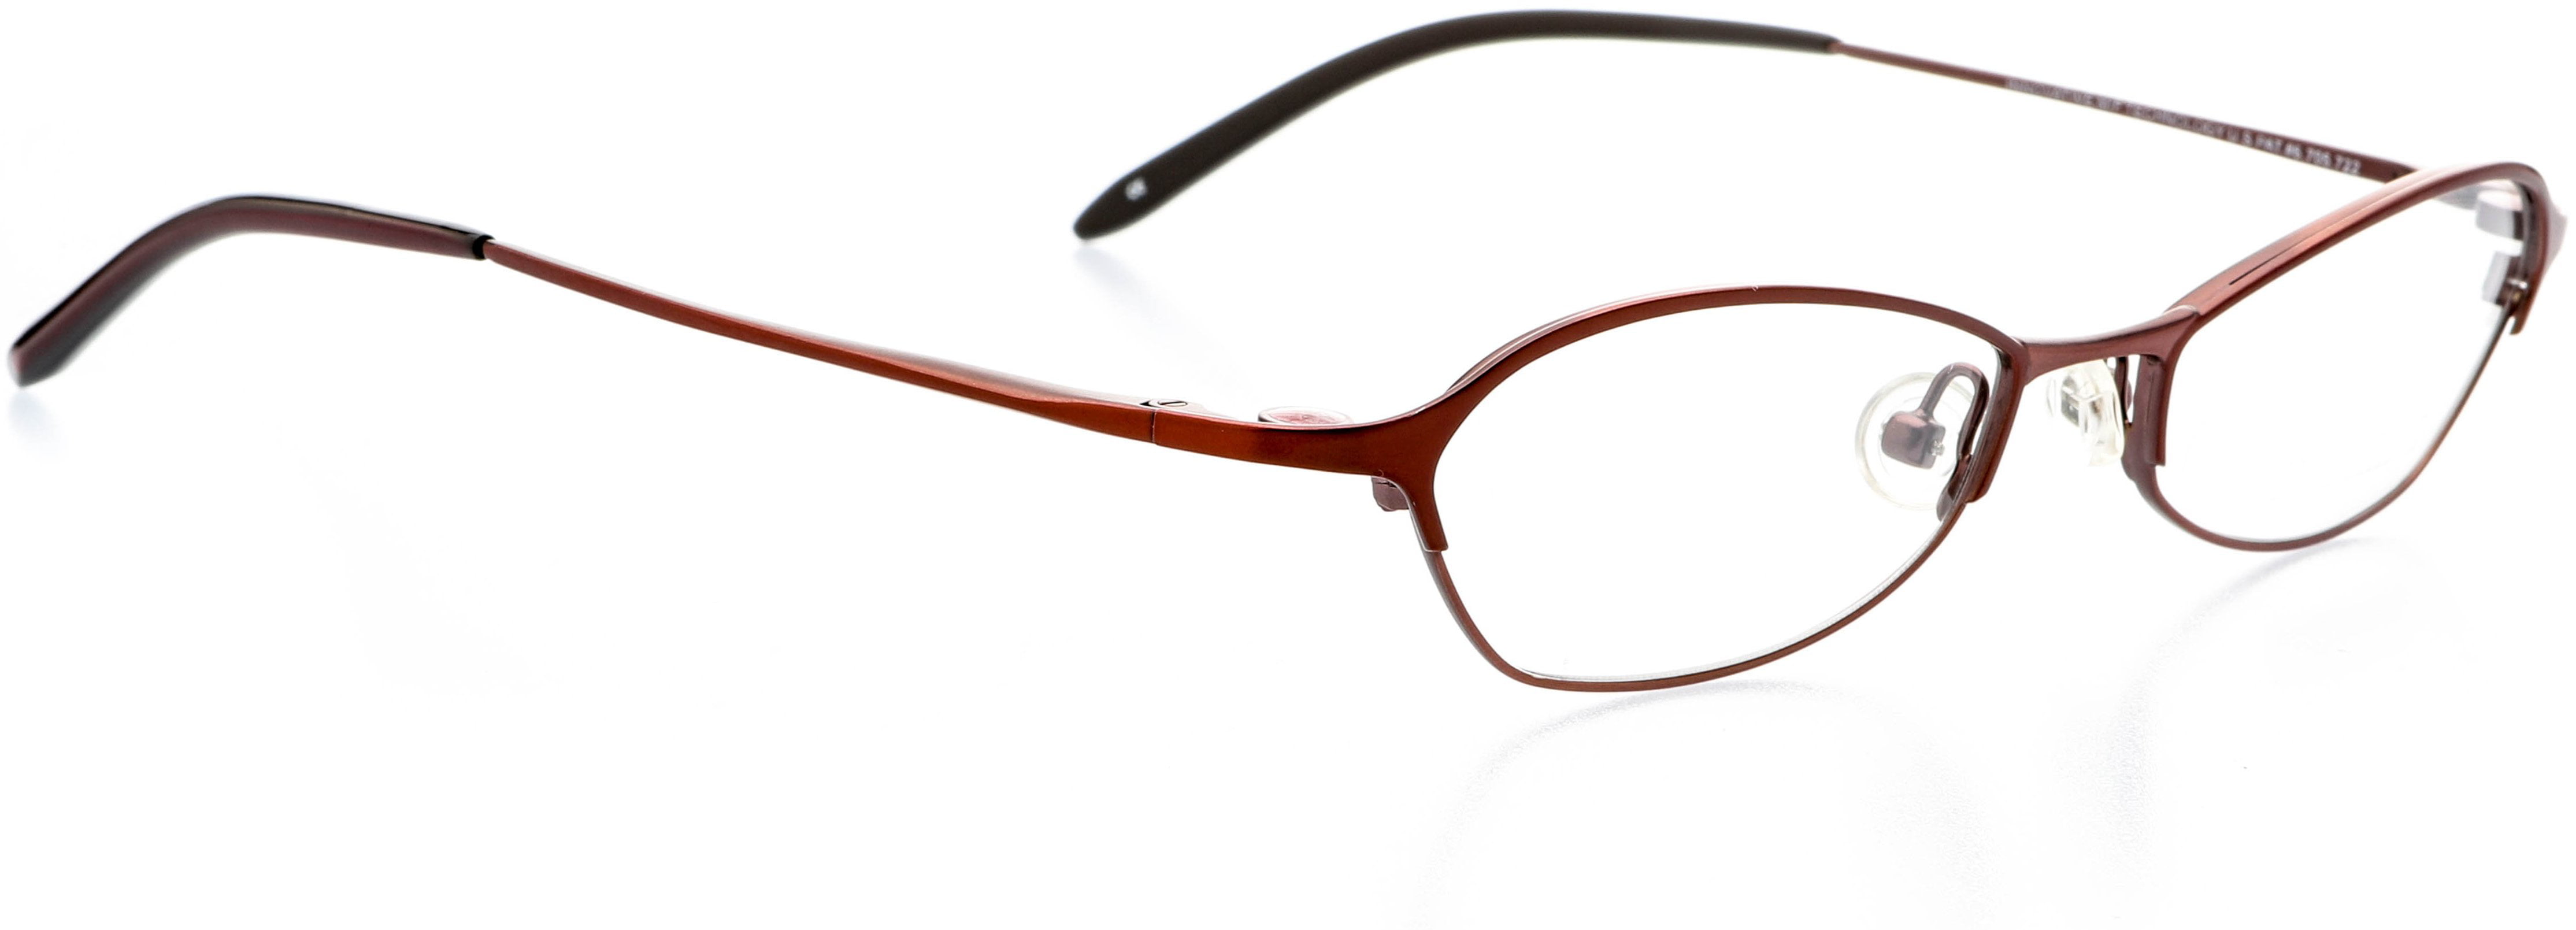 Hit Notion Eyewear - Geometric Oval Shape, Metal Full Rim Frame Glasses ...